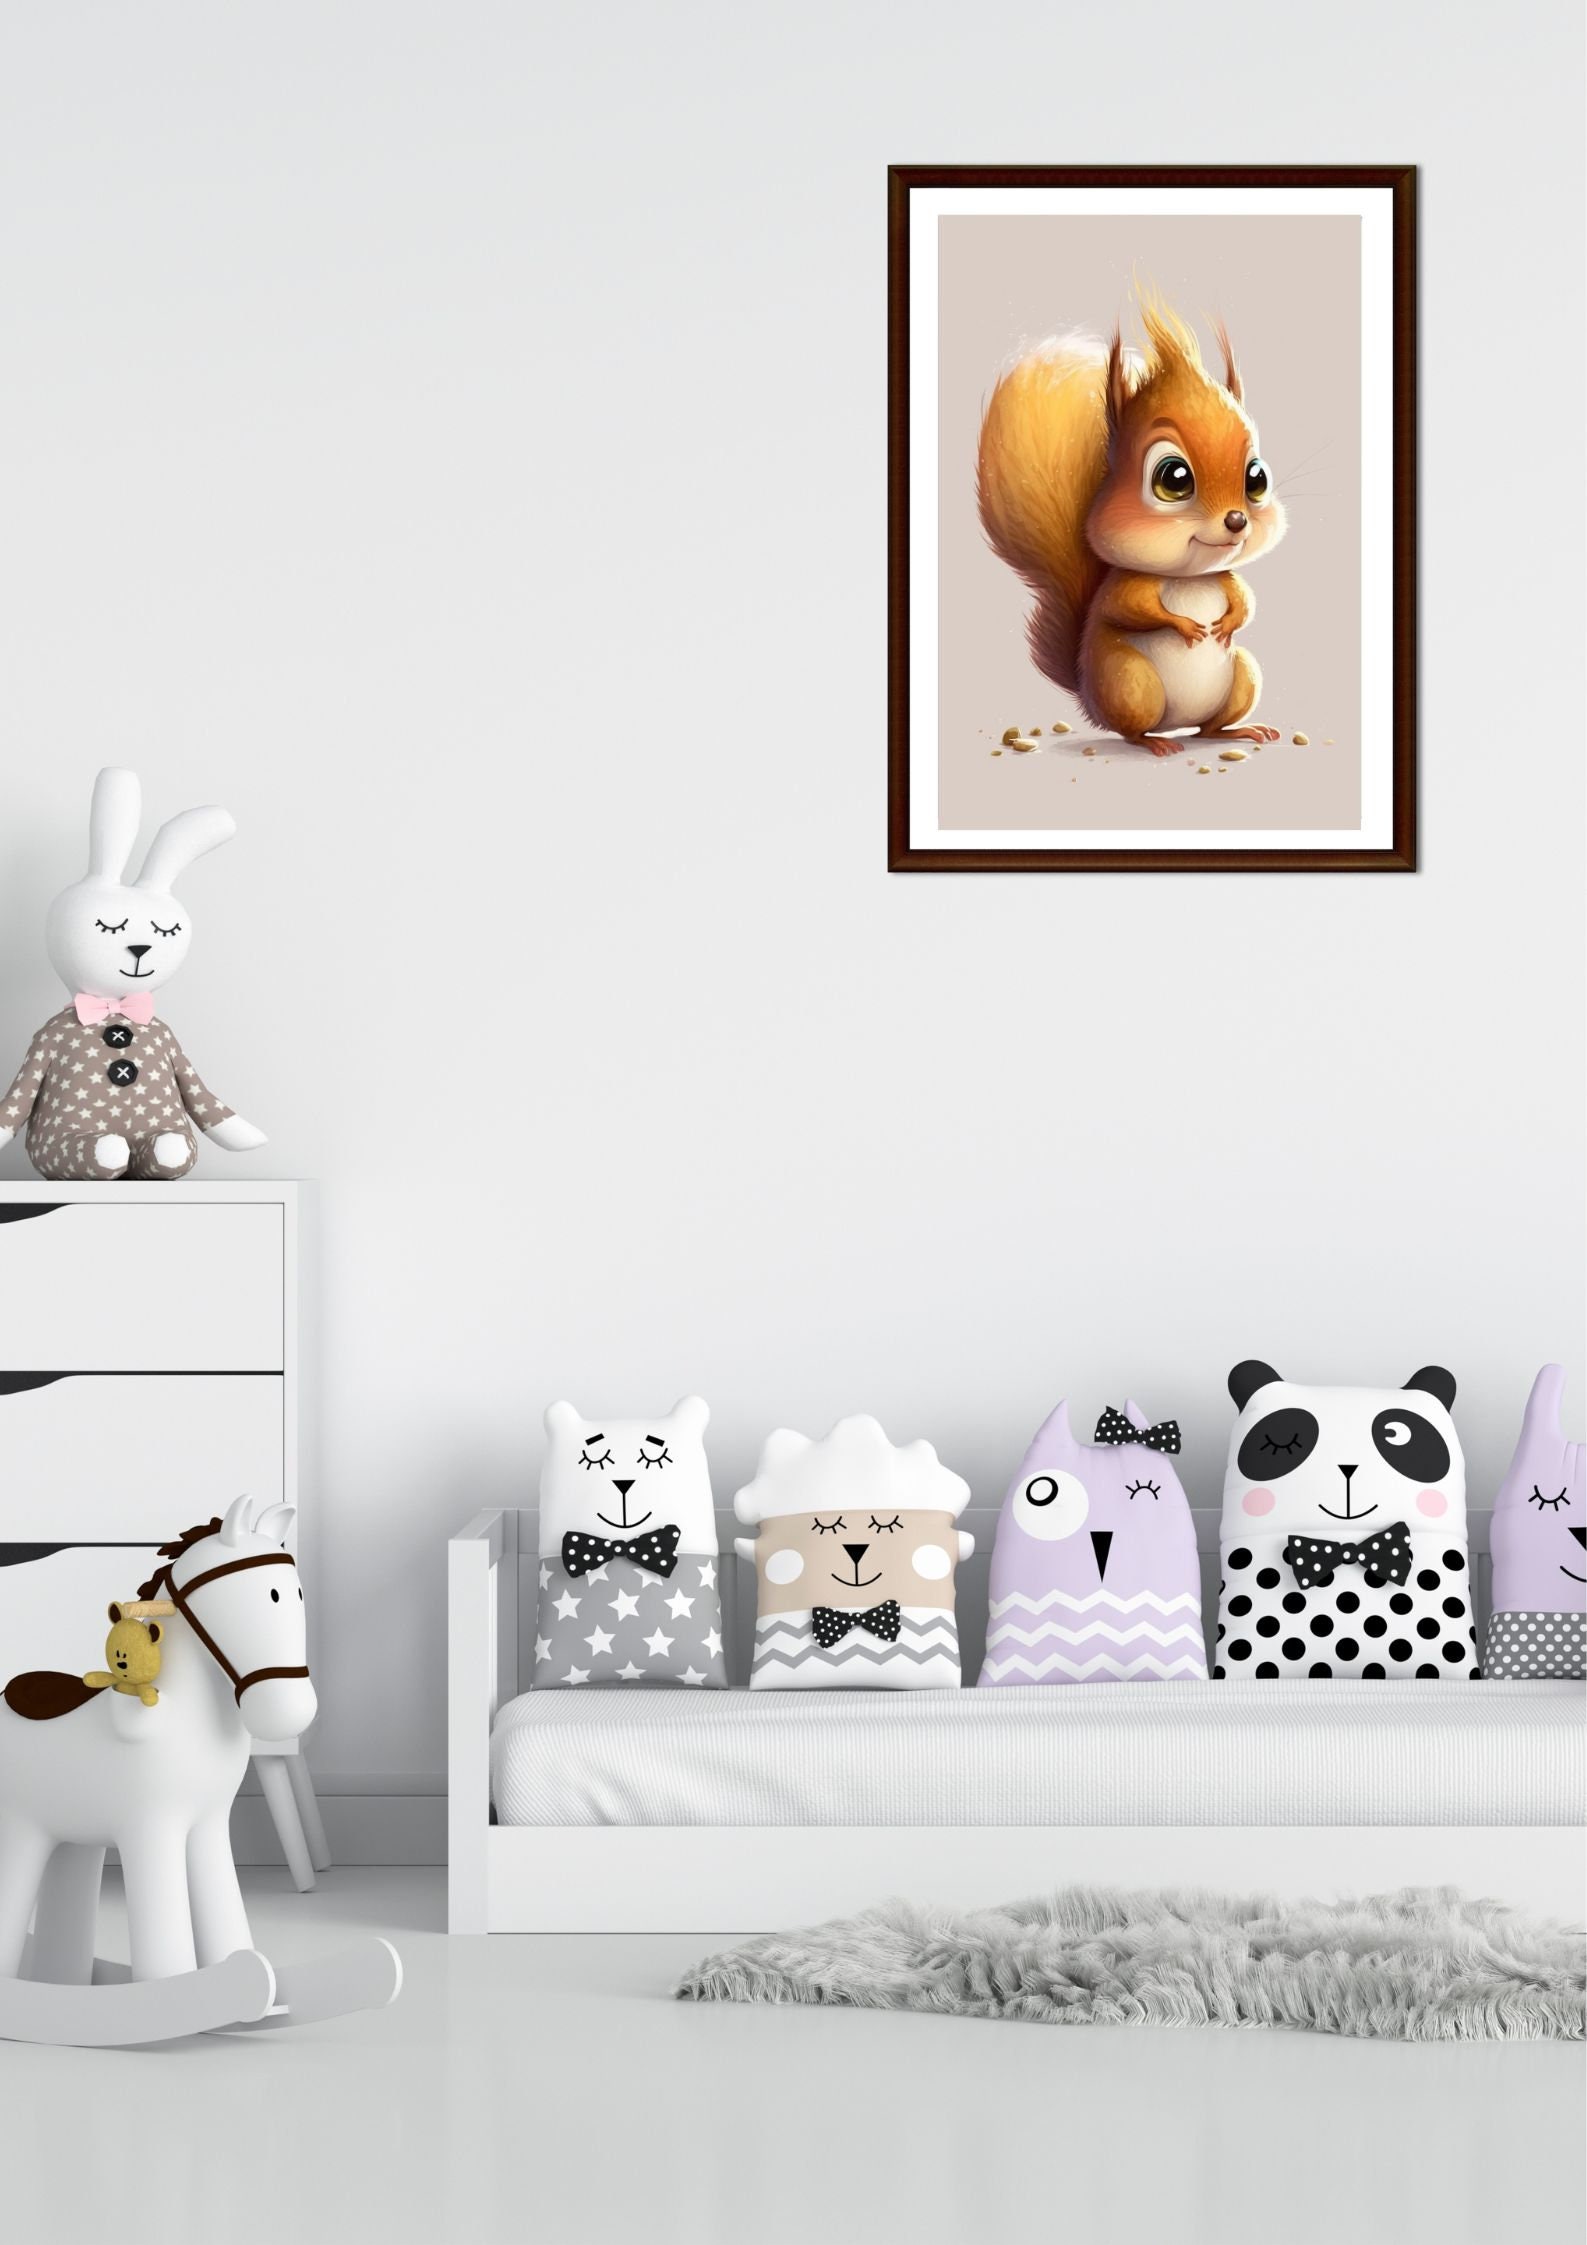 Room Poster, Printable Download, Squirrel - Cute Child Art Art Nursery Kids Decor Instant Etsy Digital Cute Cartoon Style, Wall Art Printable